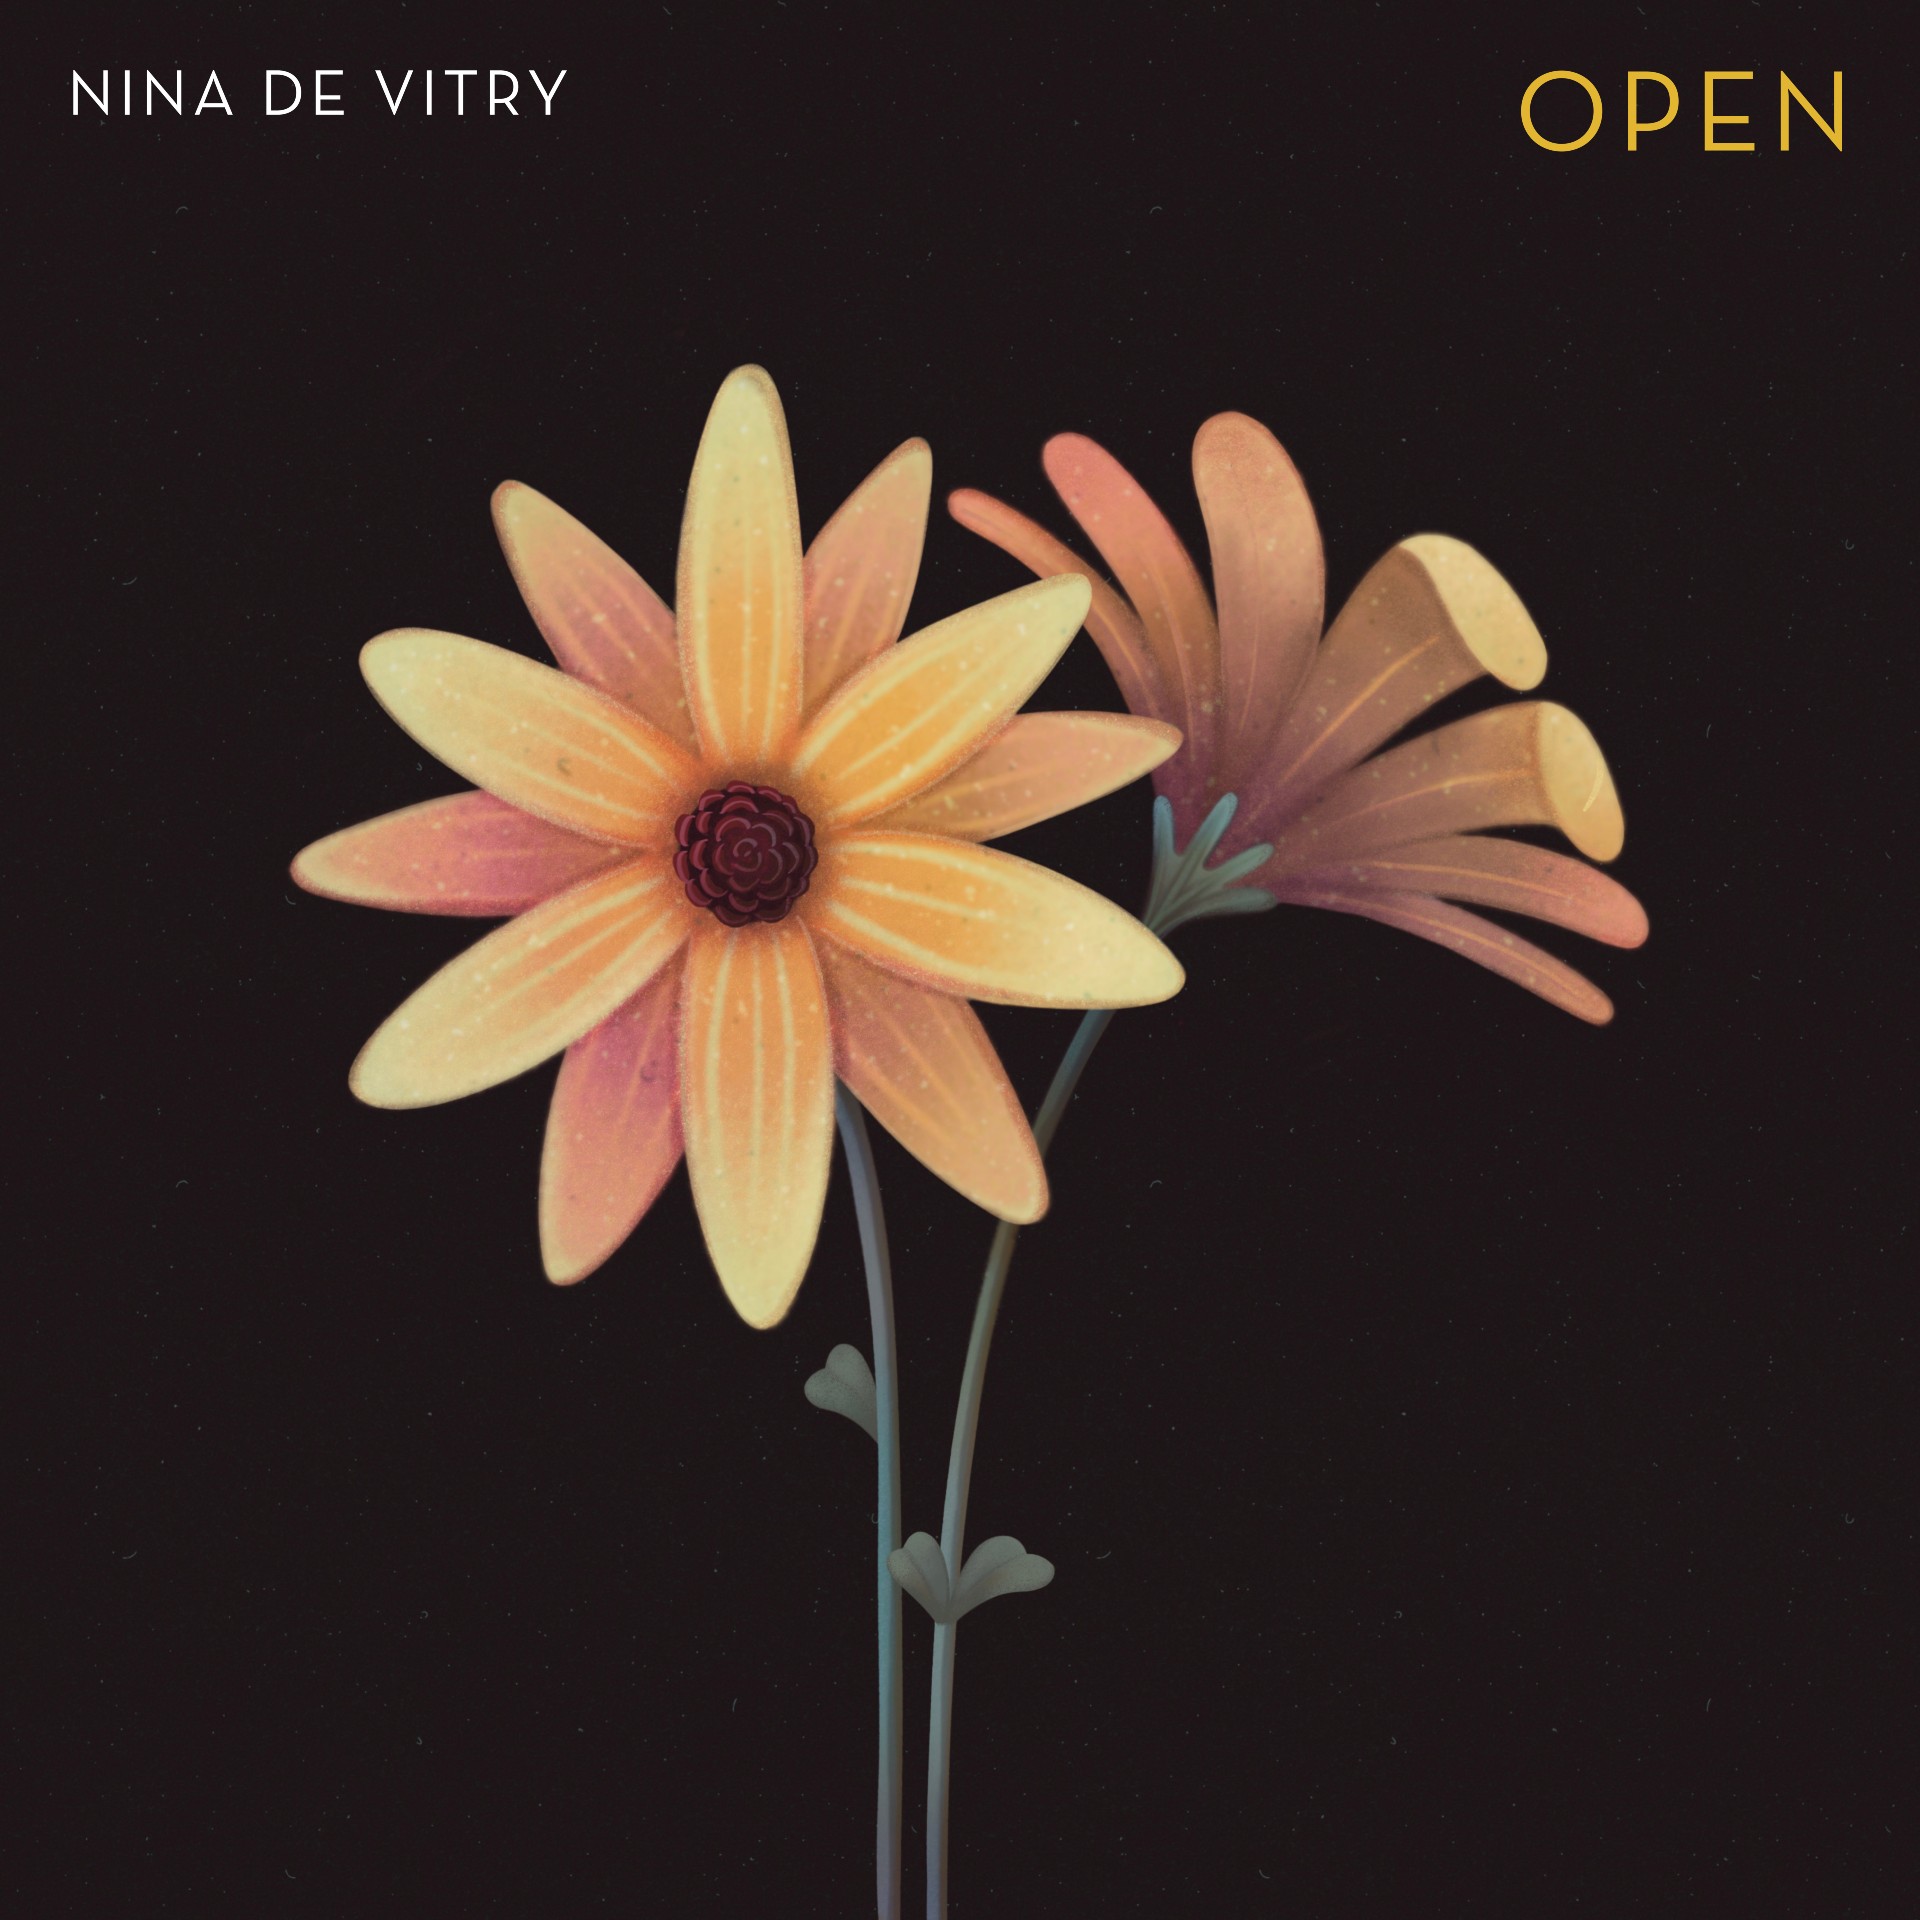 Nina de Vitry “Open” single artwork, image by Madeline Bechtel